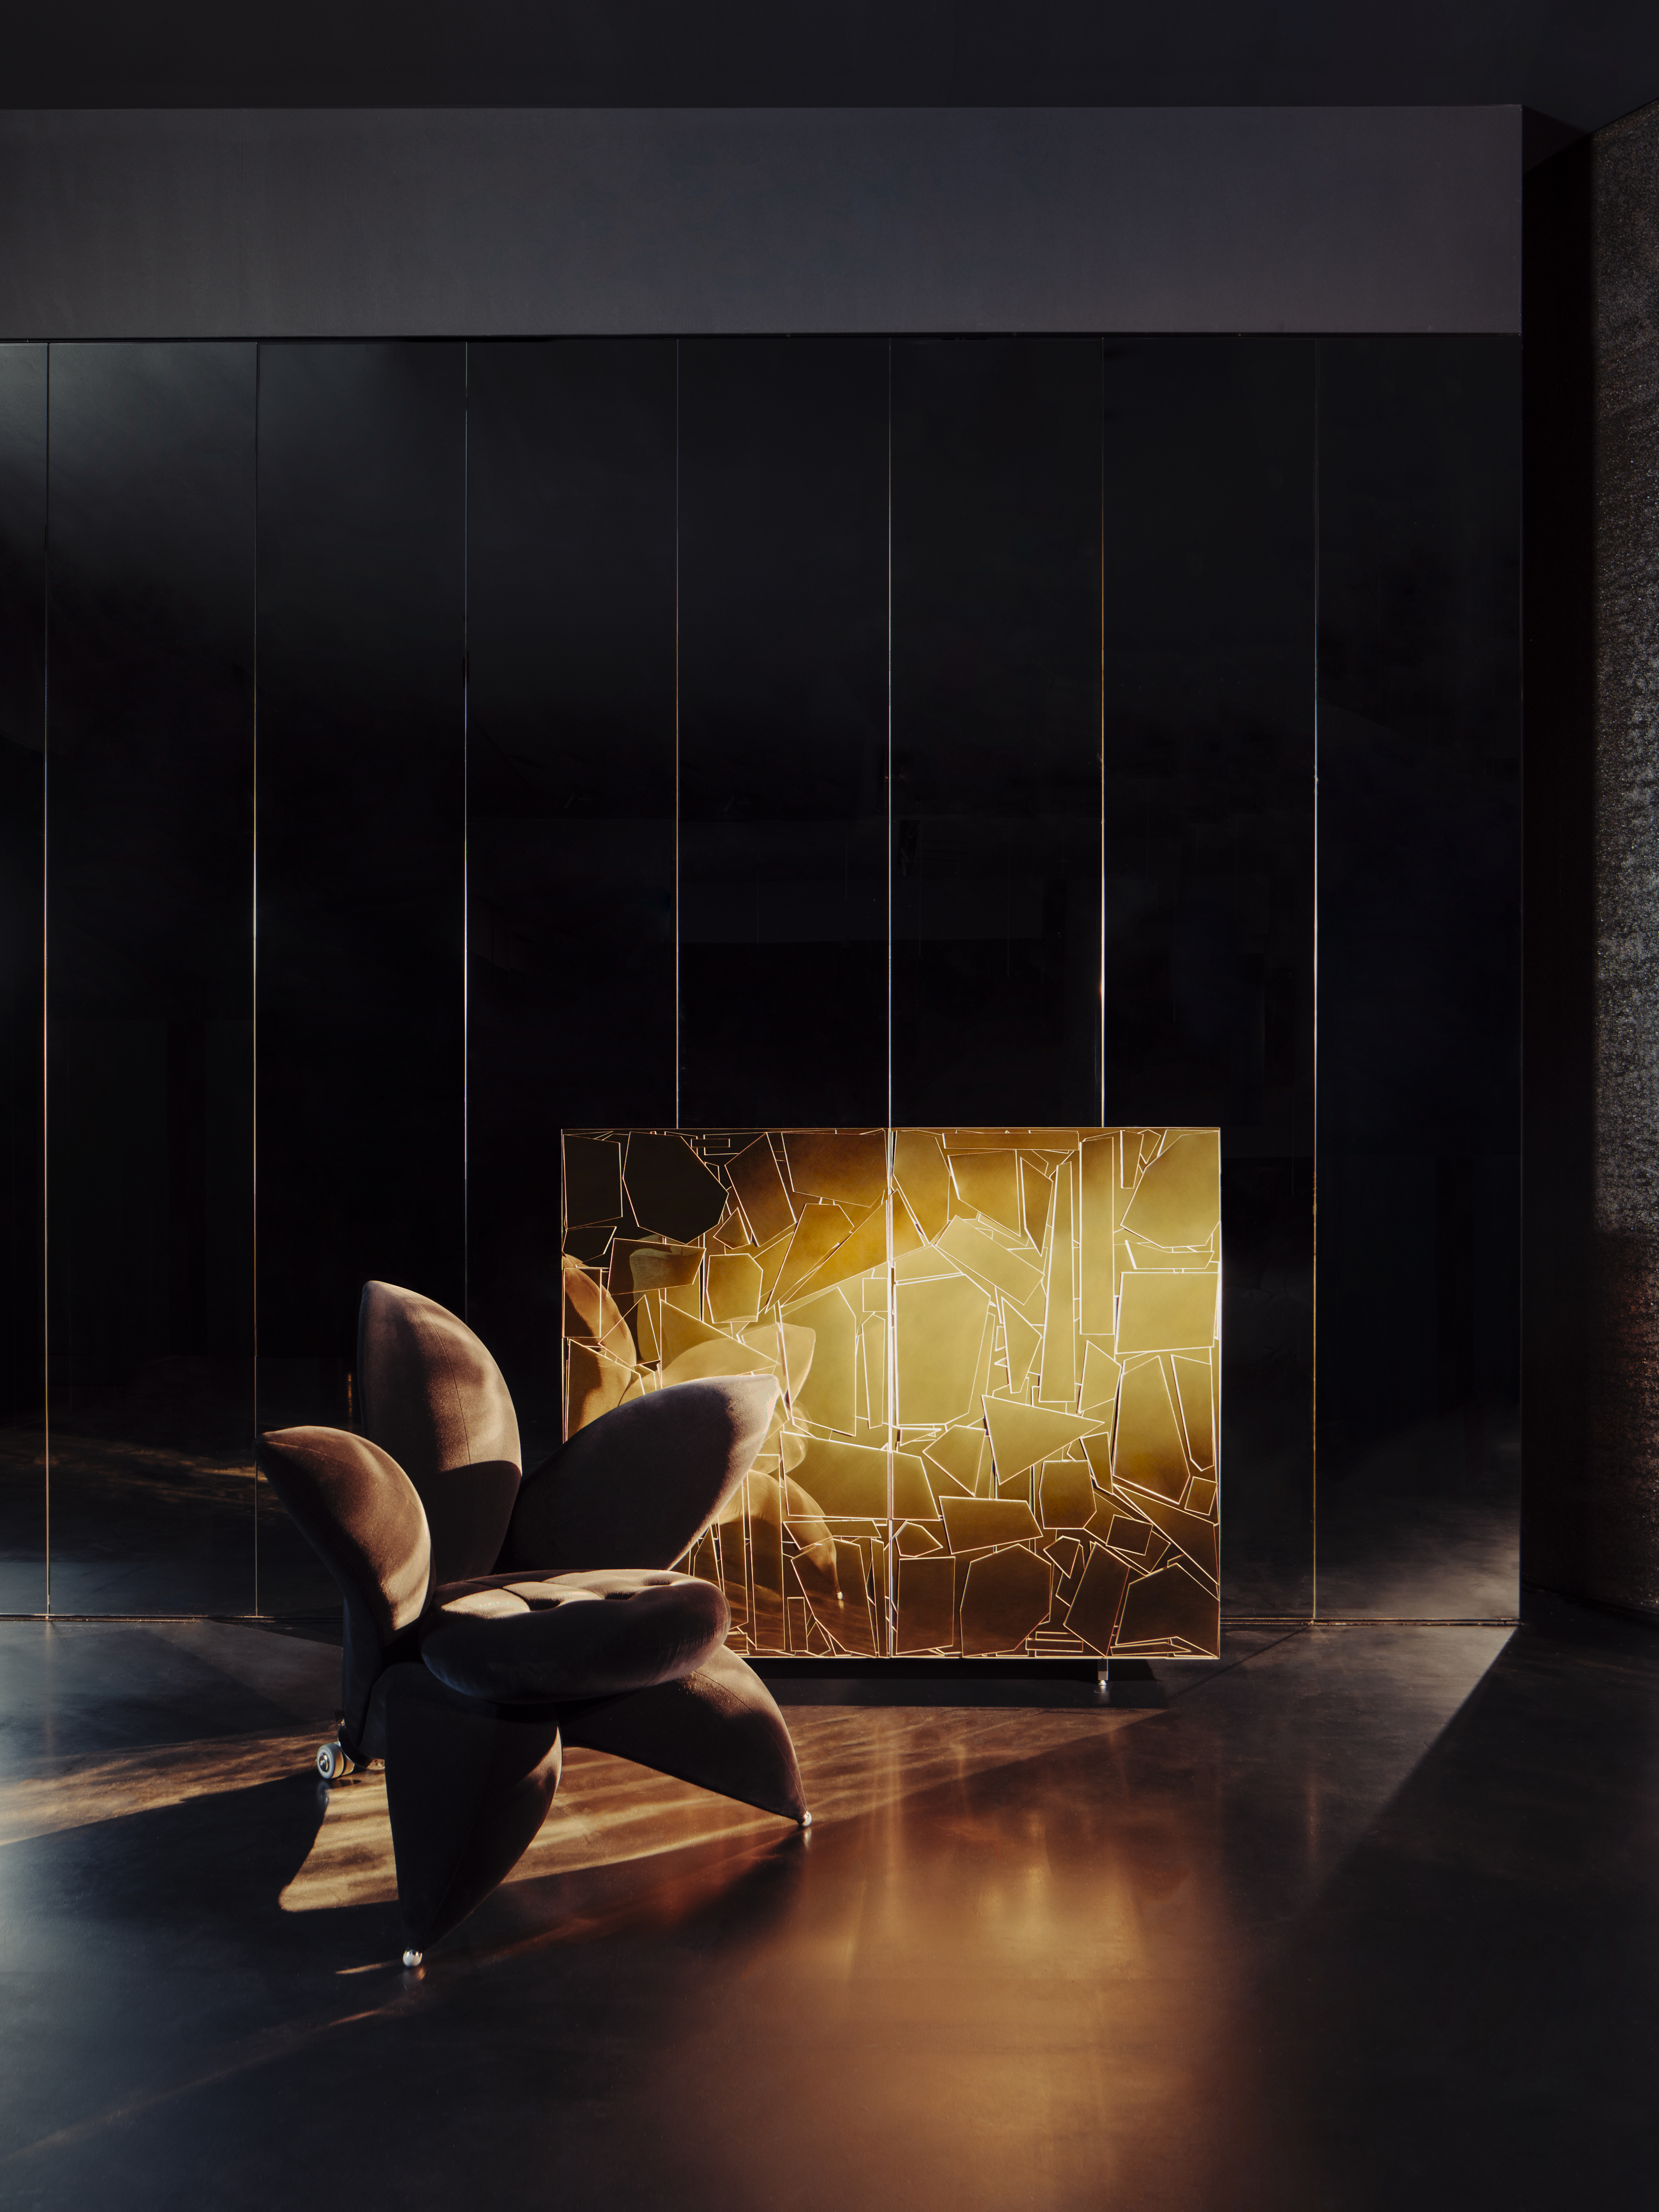 Getsuen armchair designed by Masanori Umeda, and the Scrigno cabinet designed by Fernando and Humberto Campana. Photo credit: Khoogj.